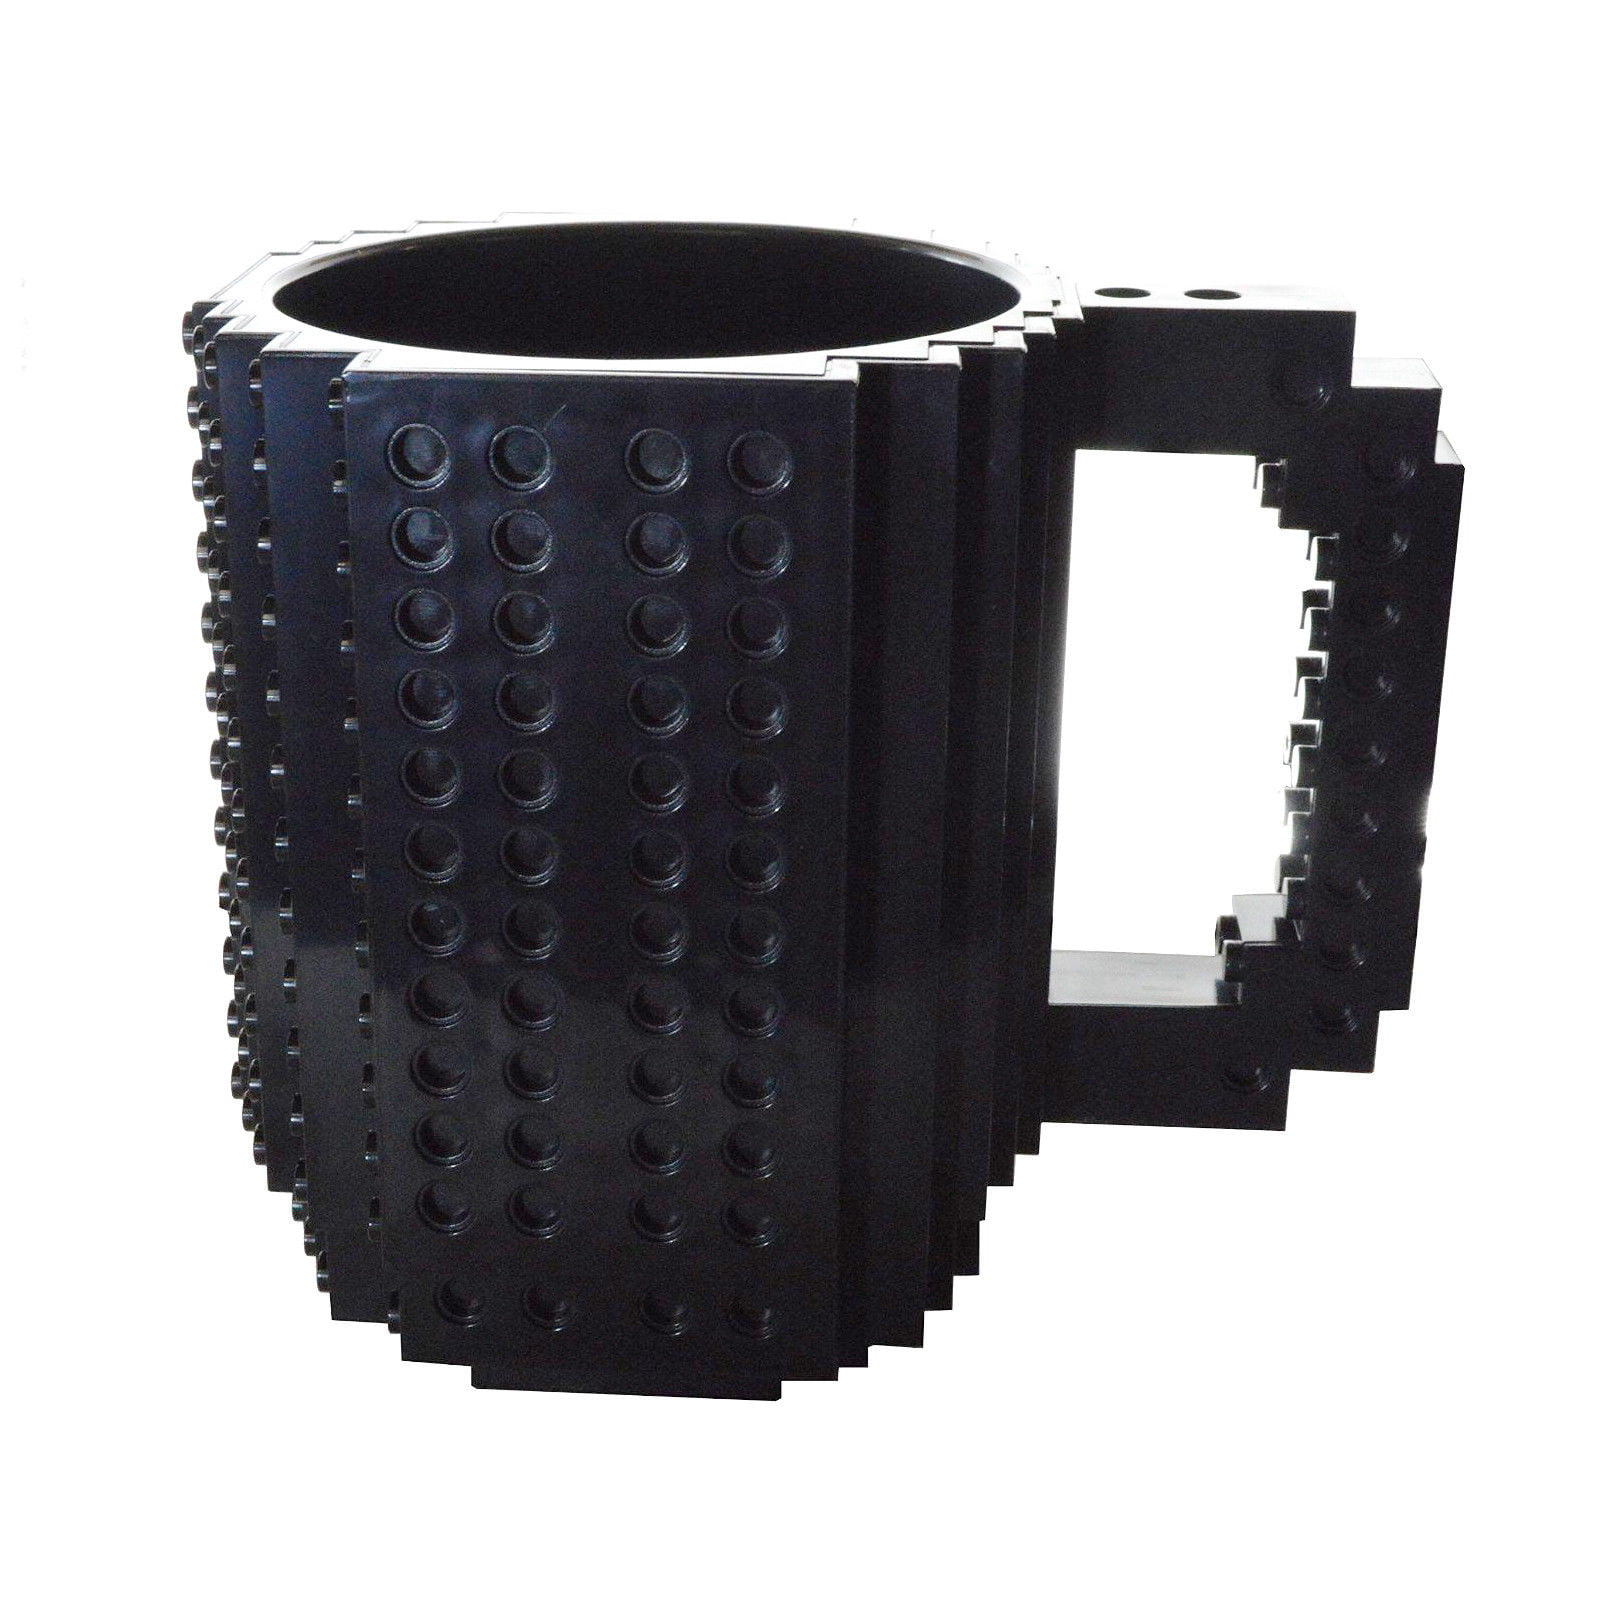 Lego Colors Coffee Mug